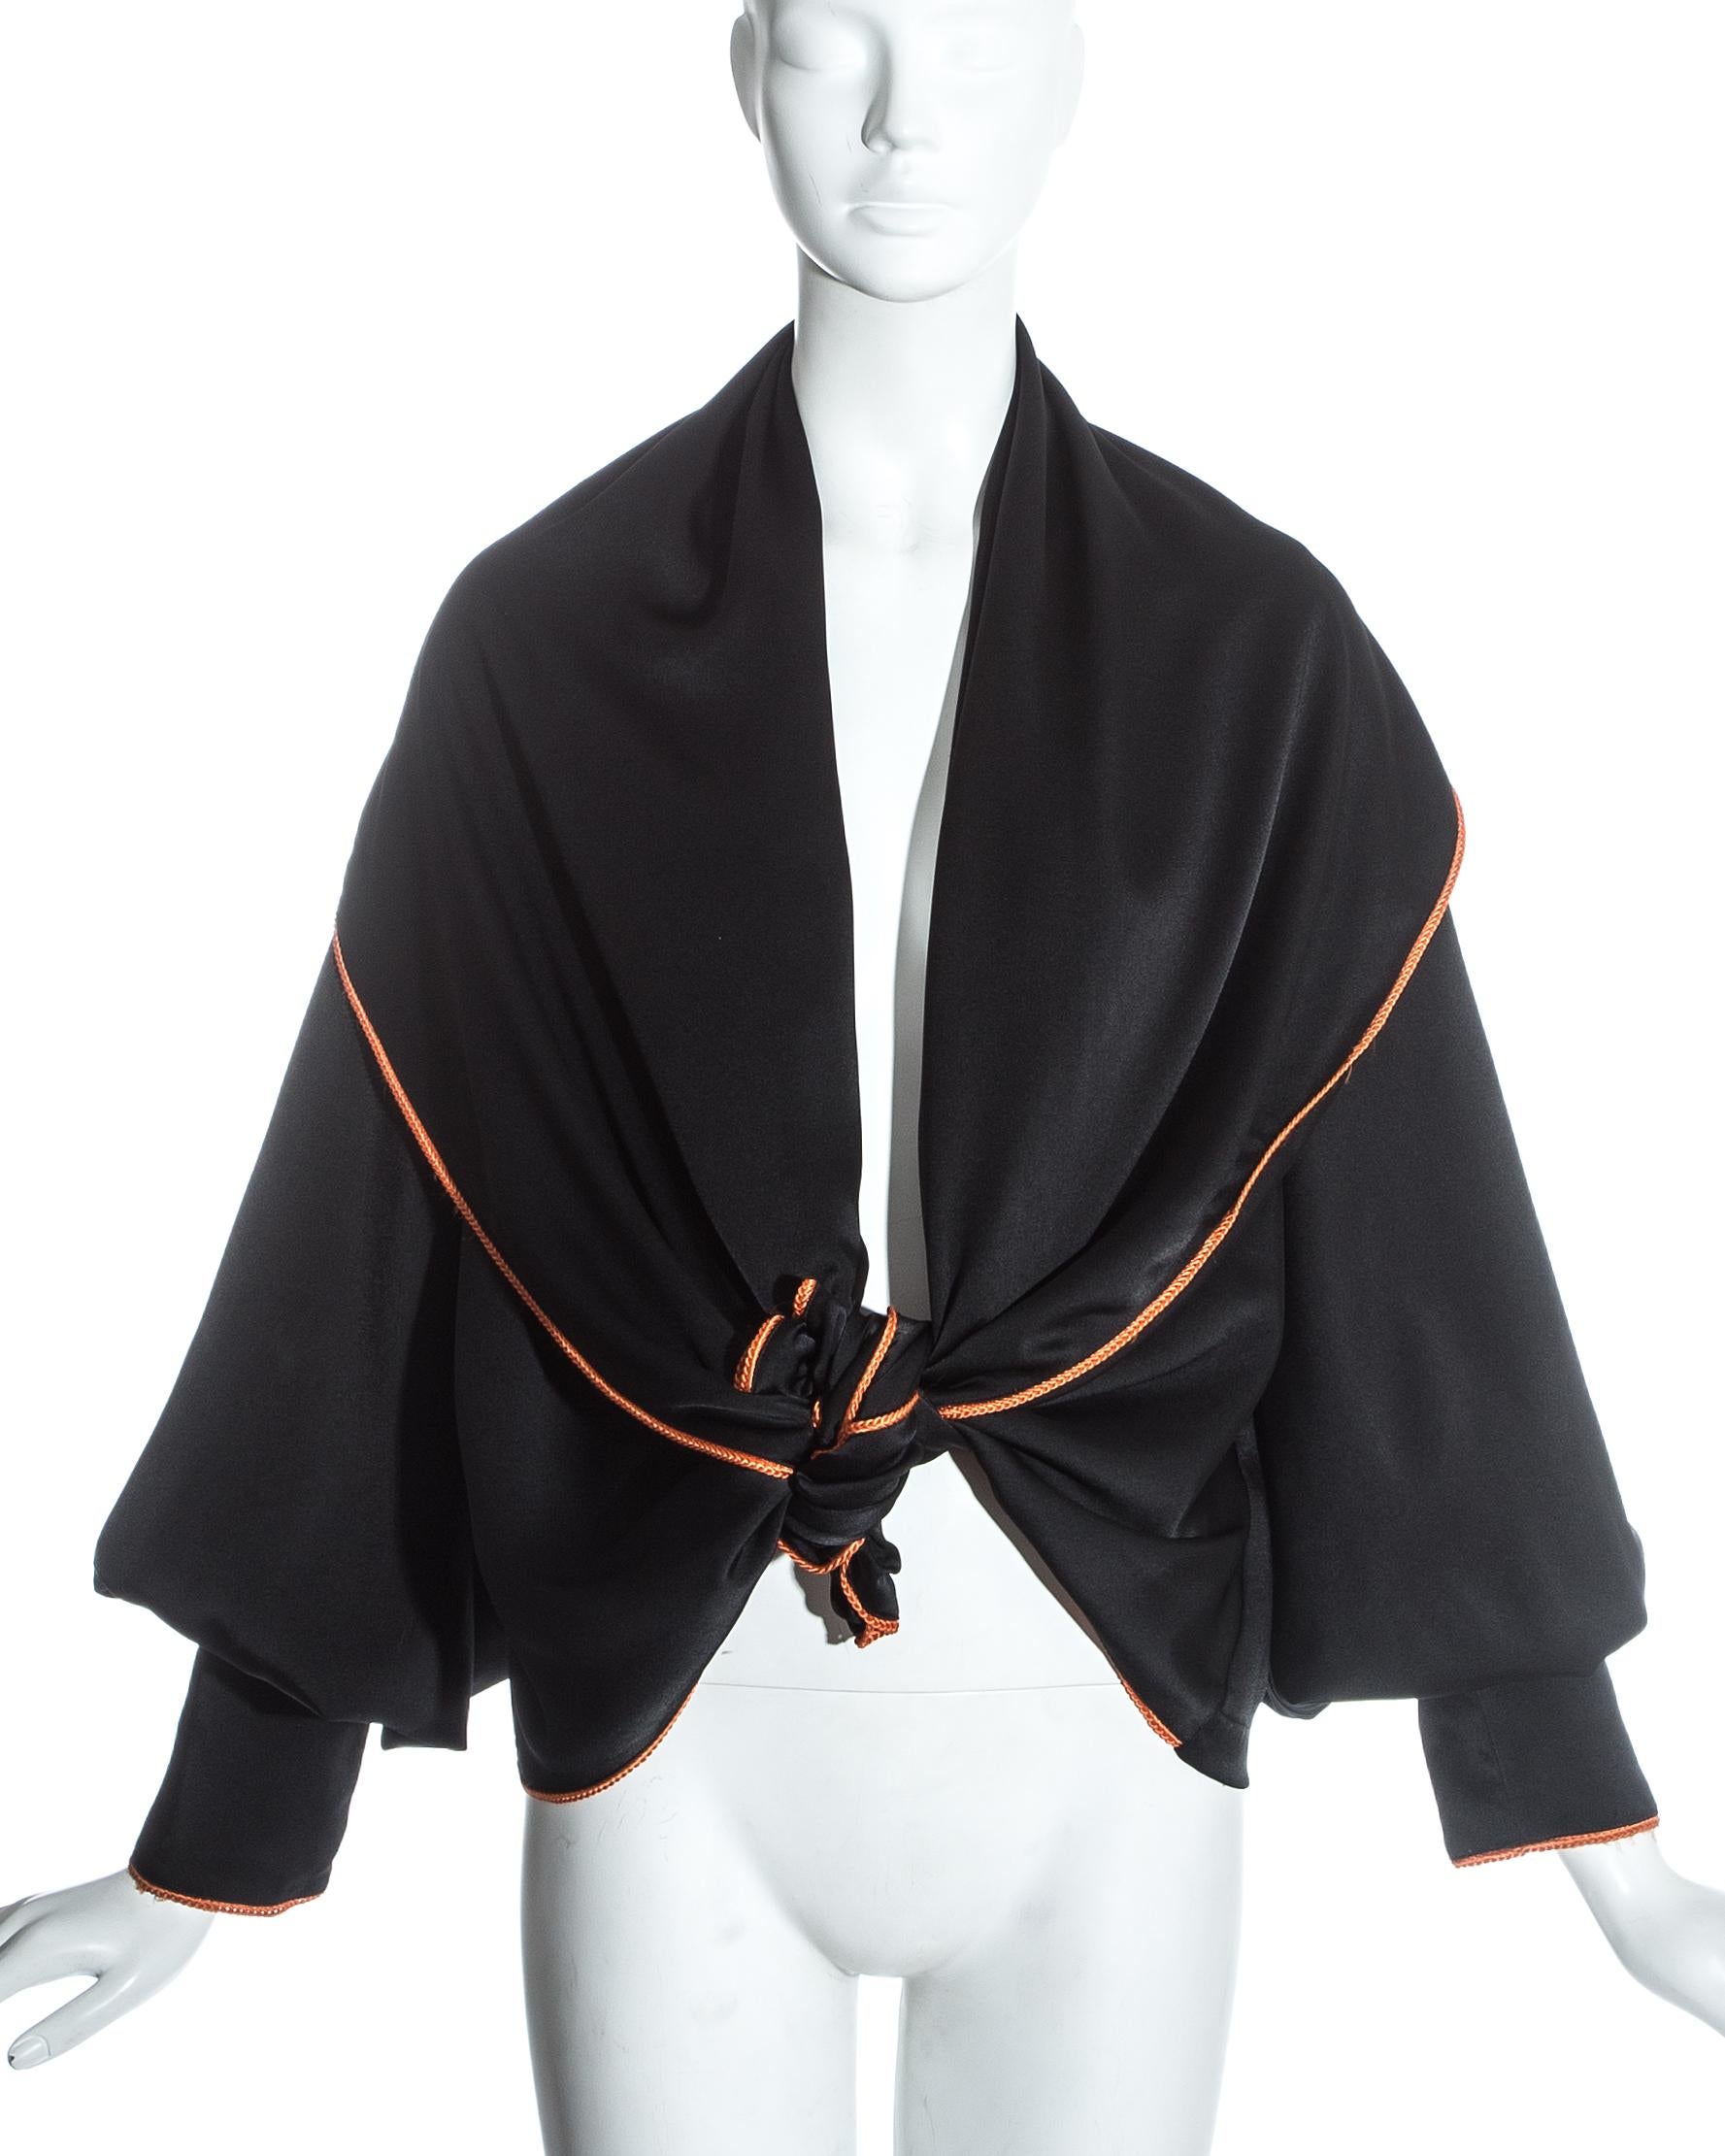 Black Vivienne Westwood black satin hooded bolero jacket with orange trim, ss 1993